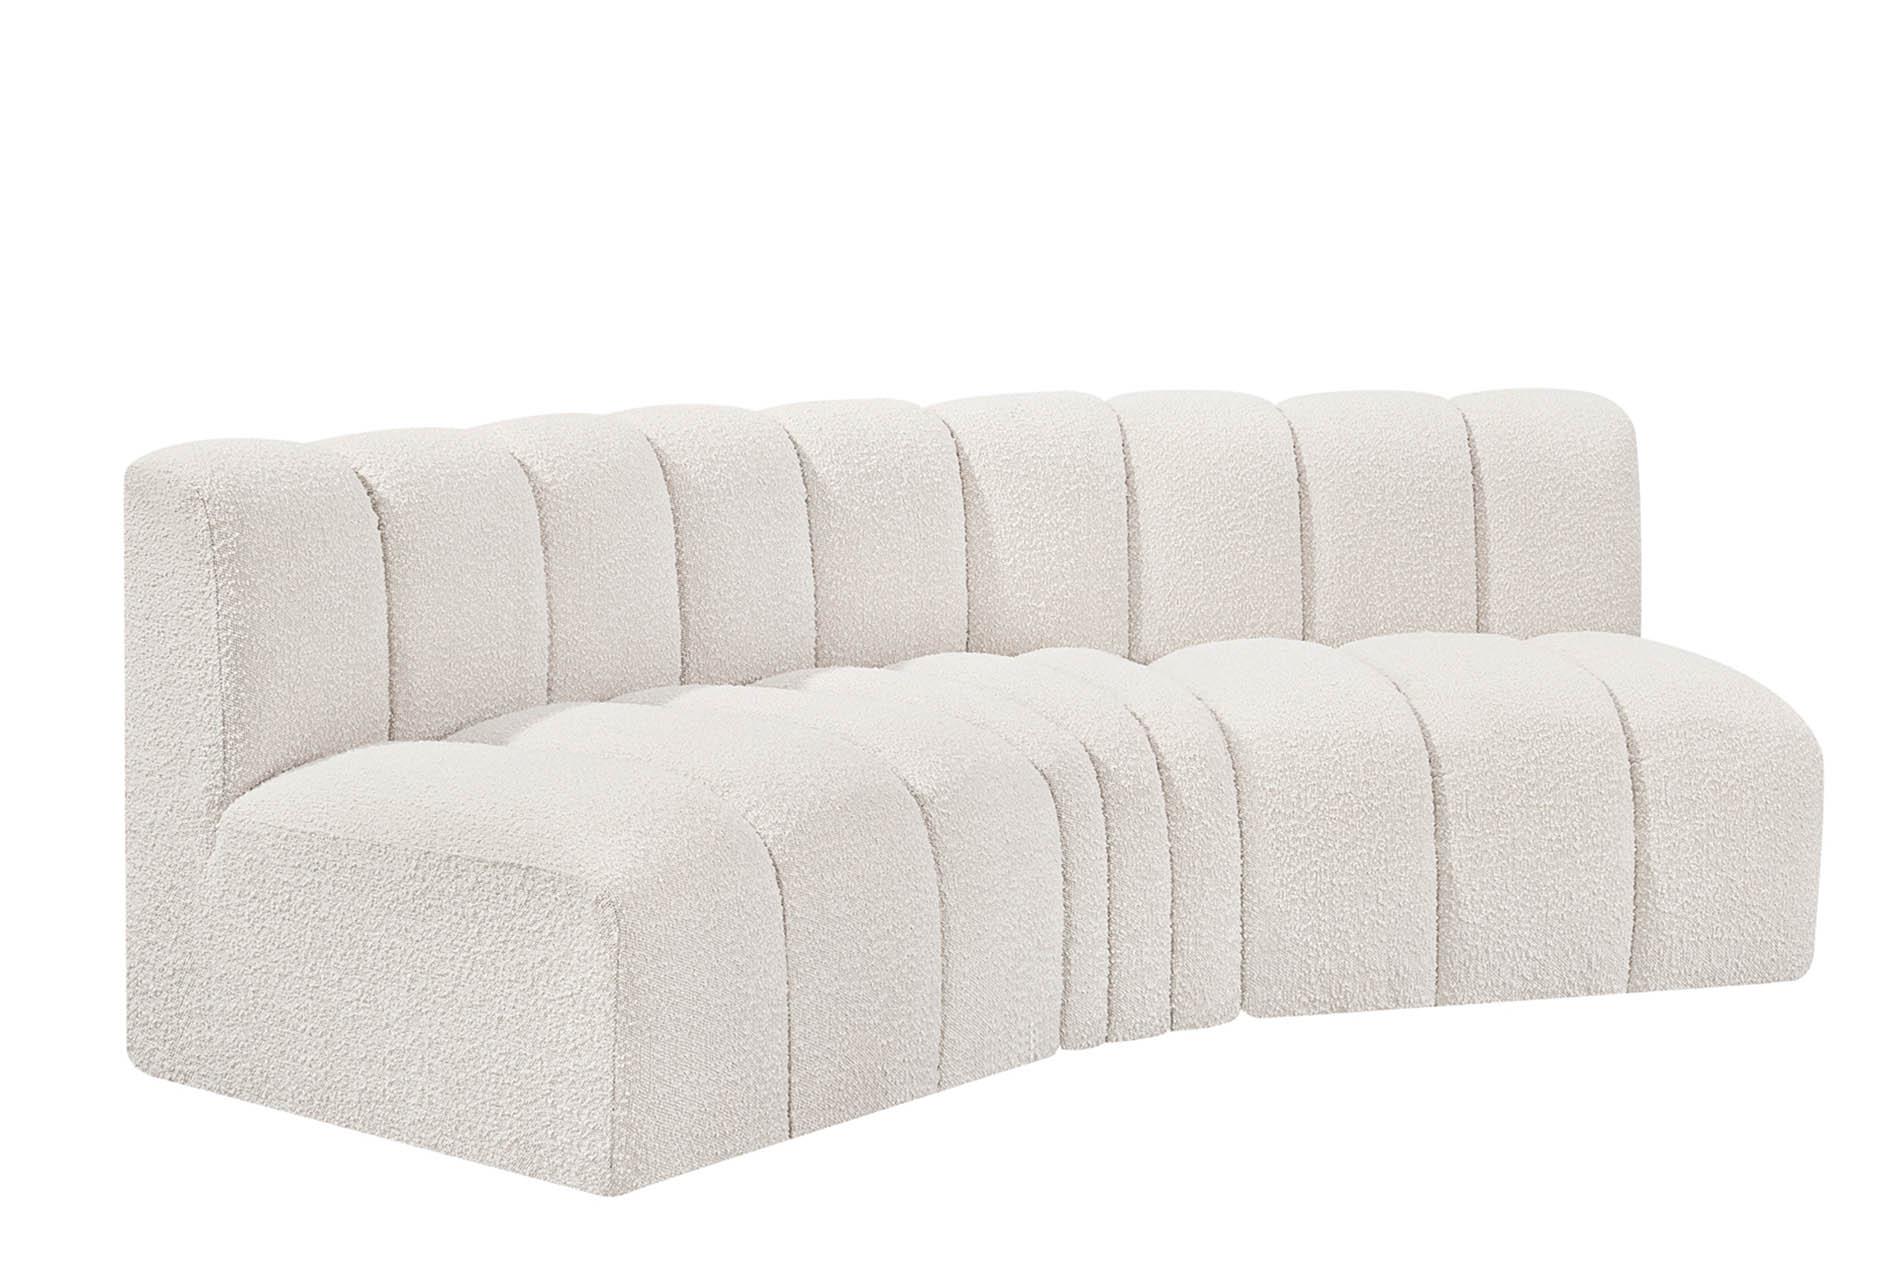 Contemporary, Modern Modular Sectional Sofa ARC 102Grey-S3B 102Cream-S3B in Cream 